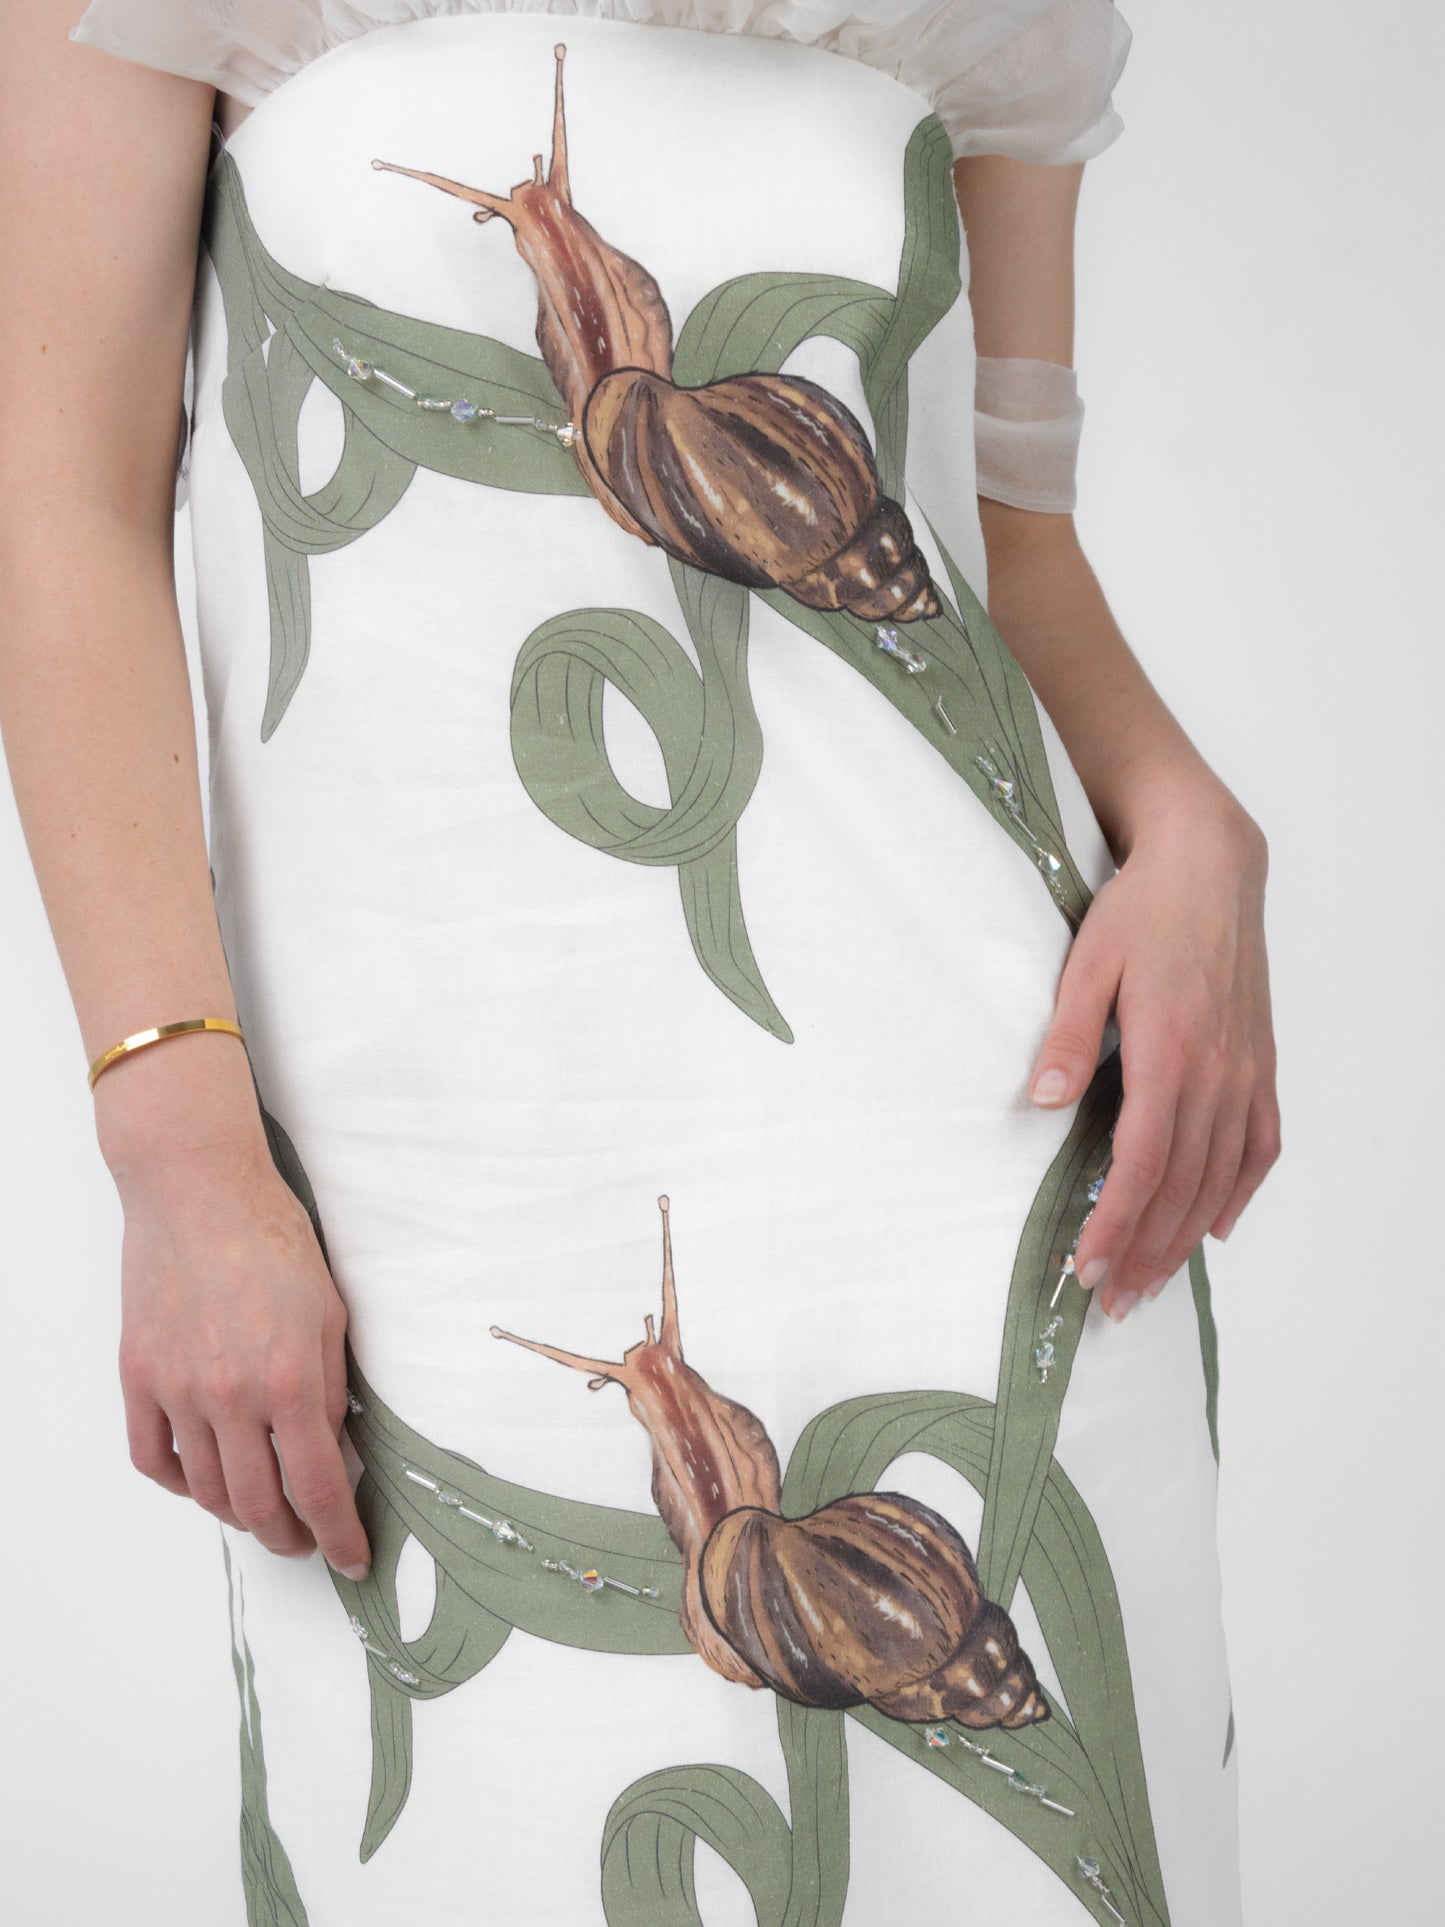 The snail dress